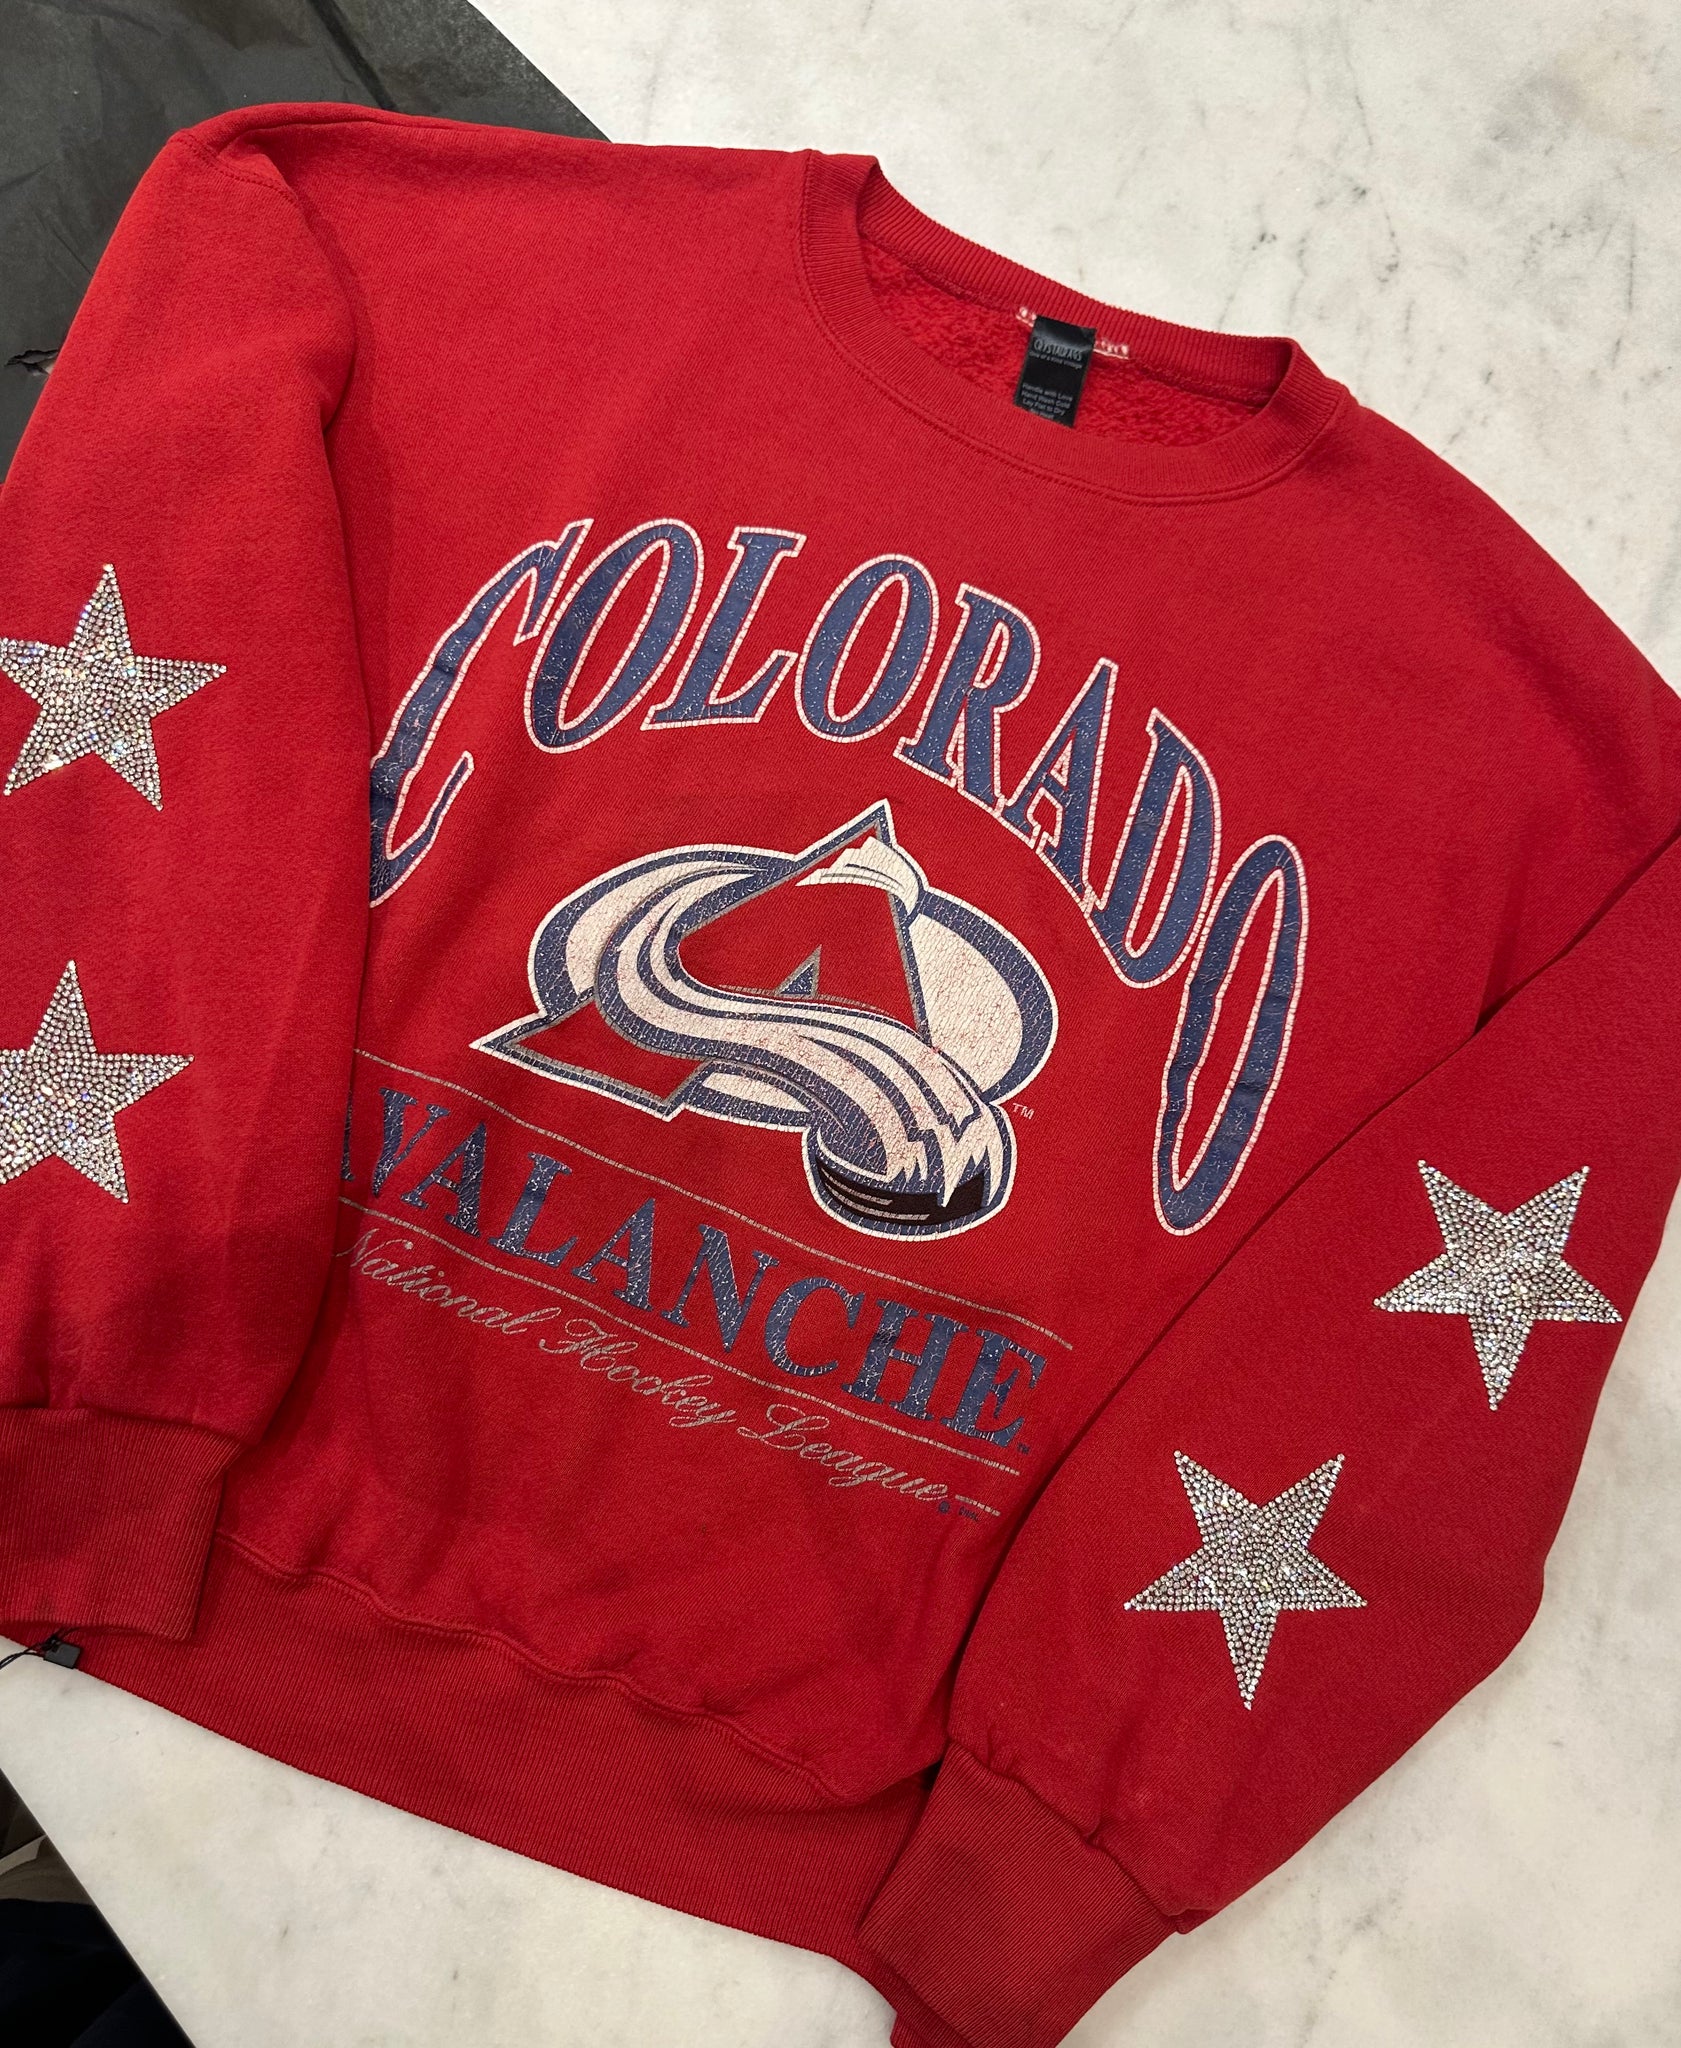 Colorado Avalanche NHL National Hockey League Vintage Shirt